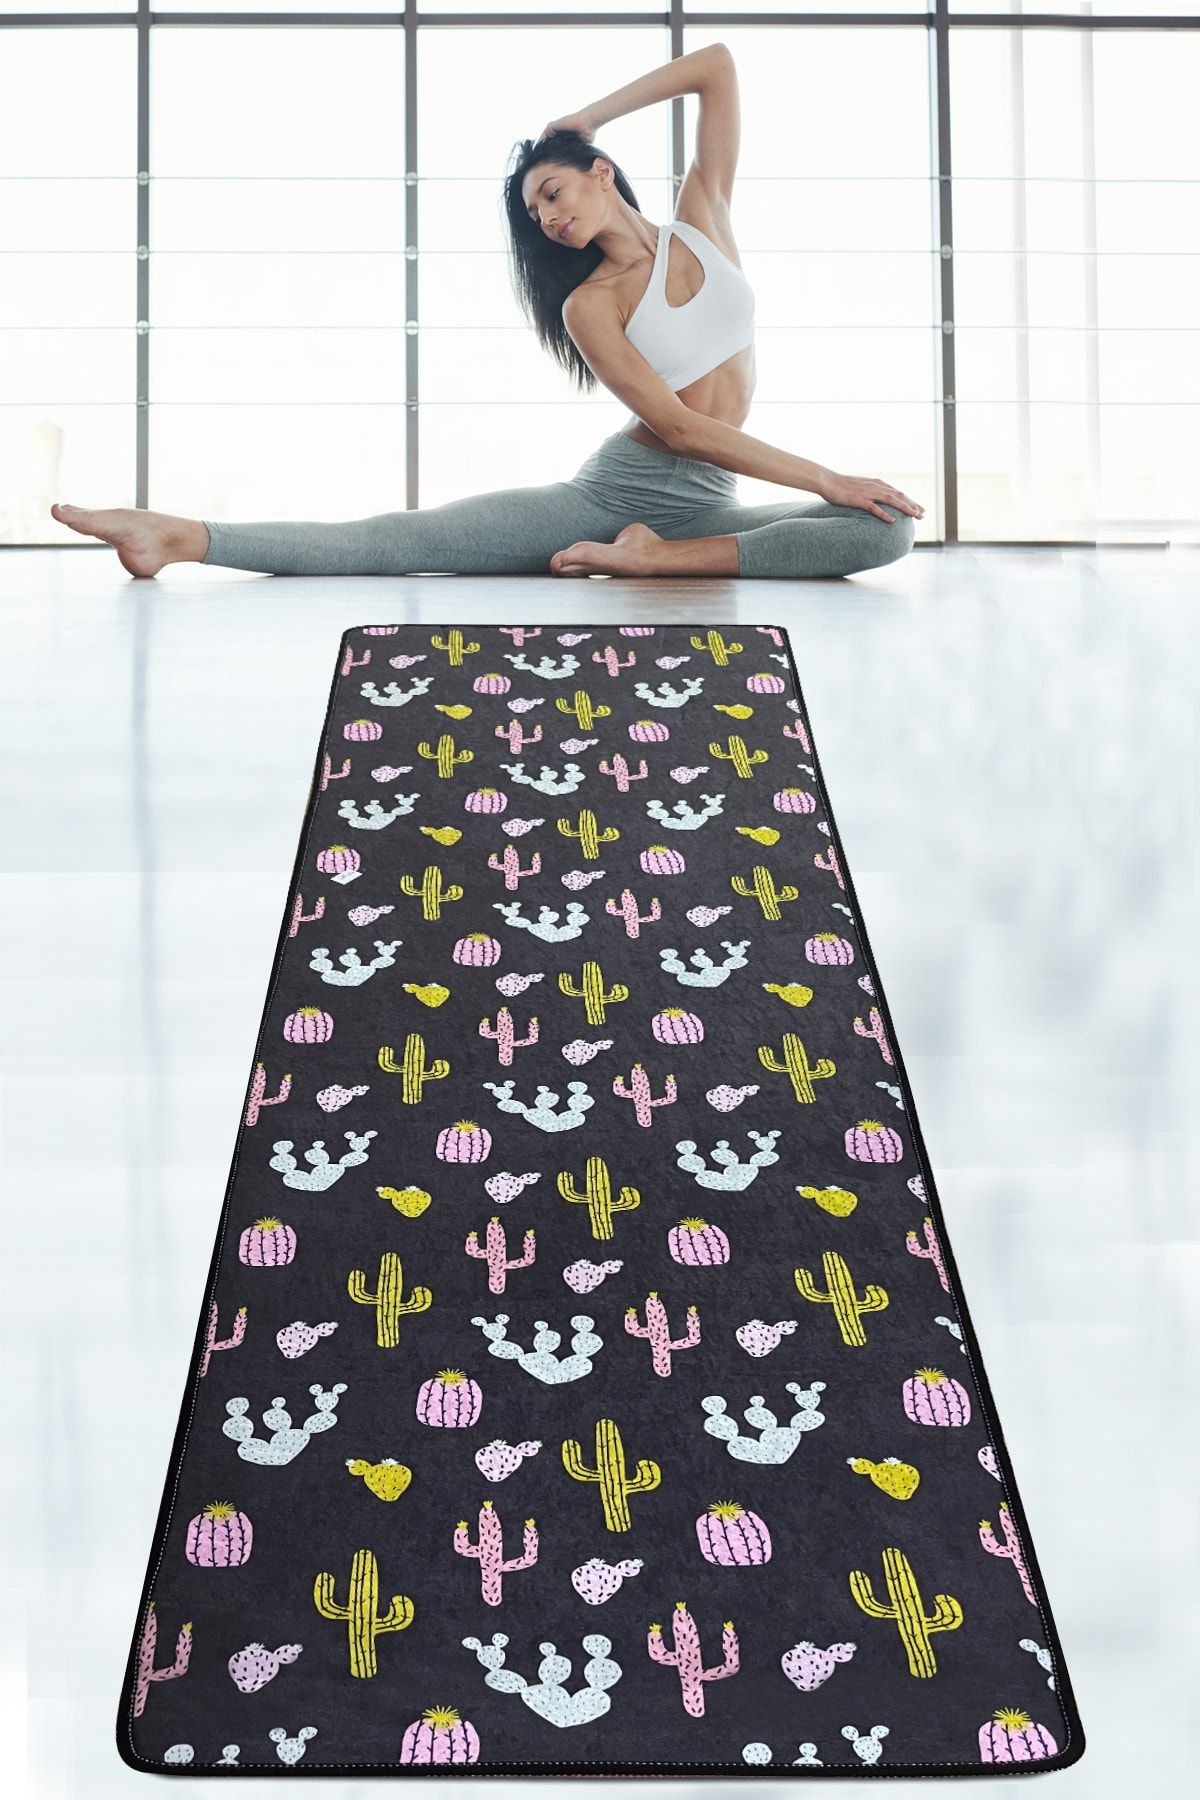 Chilai Home Opuntia Djt 60x200 cm Yoga Spor Fitness Pilates Halısı Yoga Matı Yıkanabilir Kaymaz